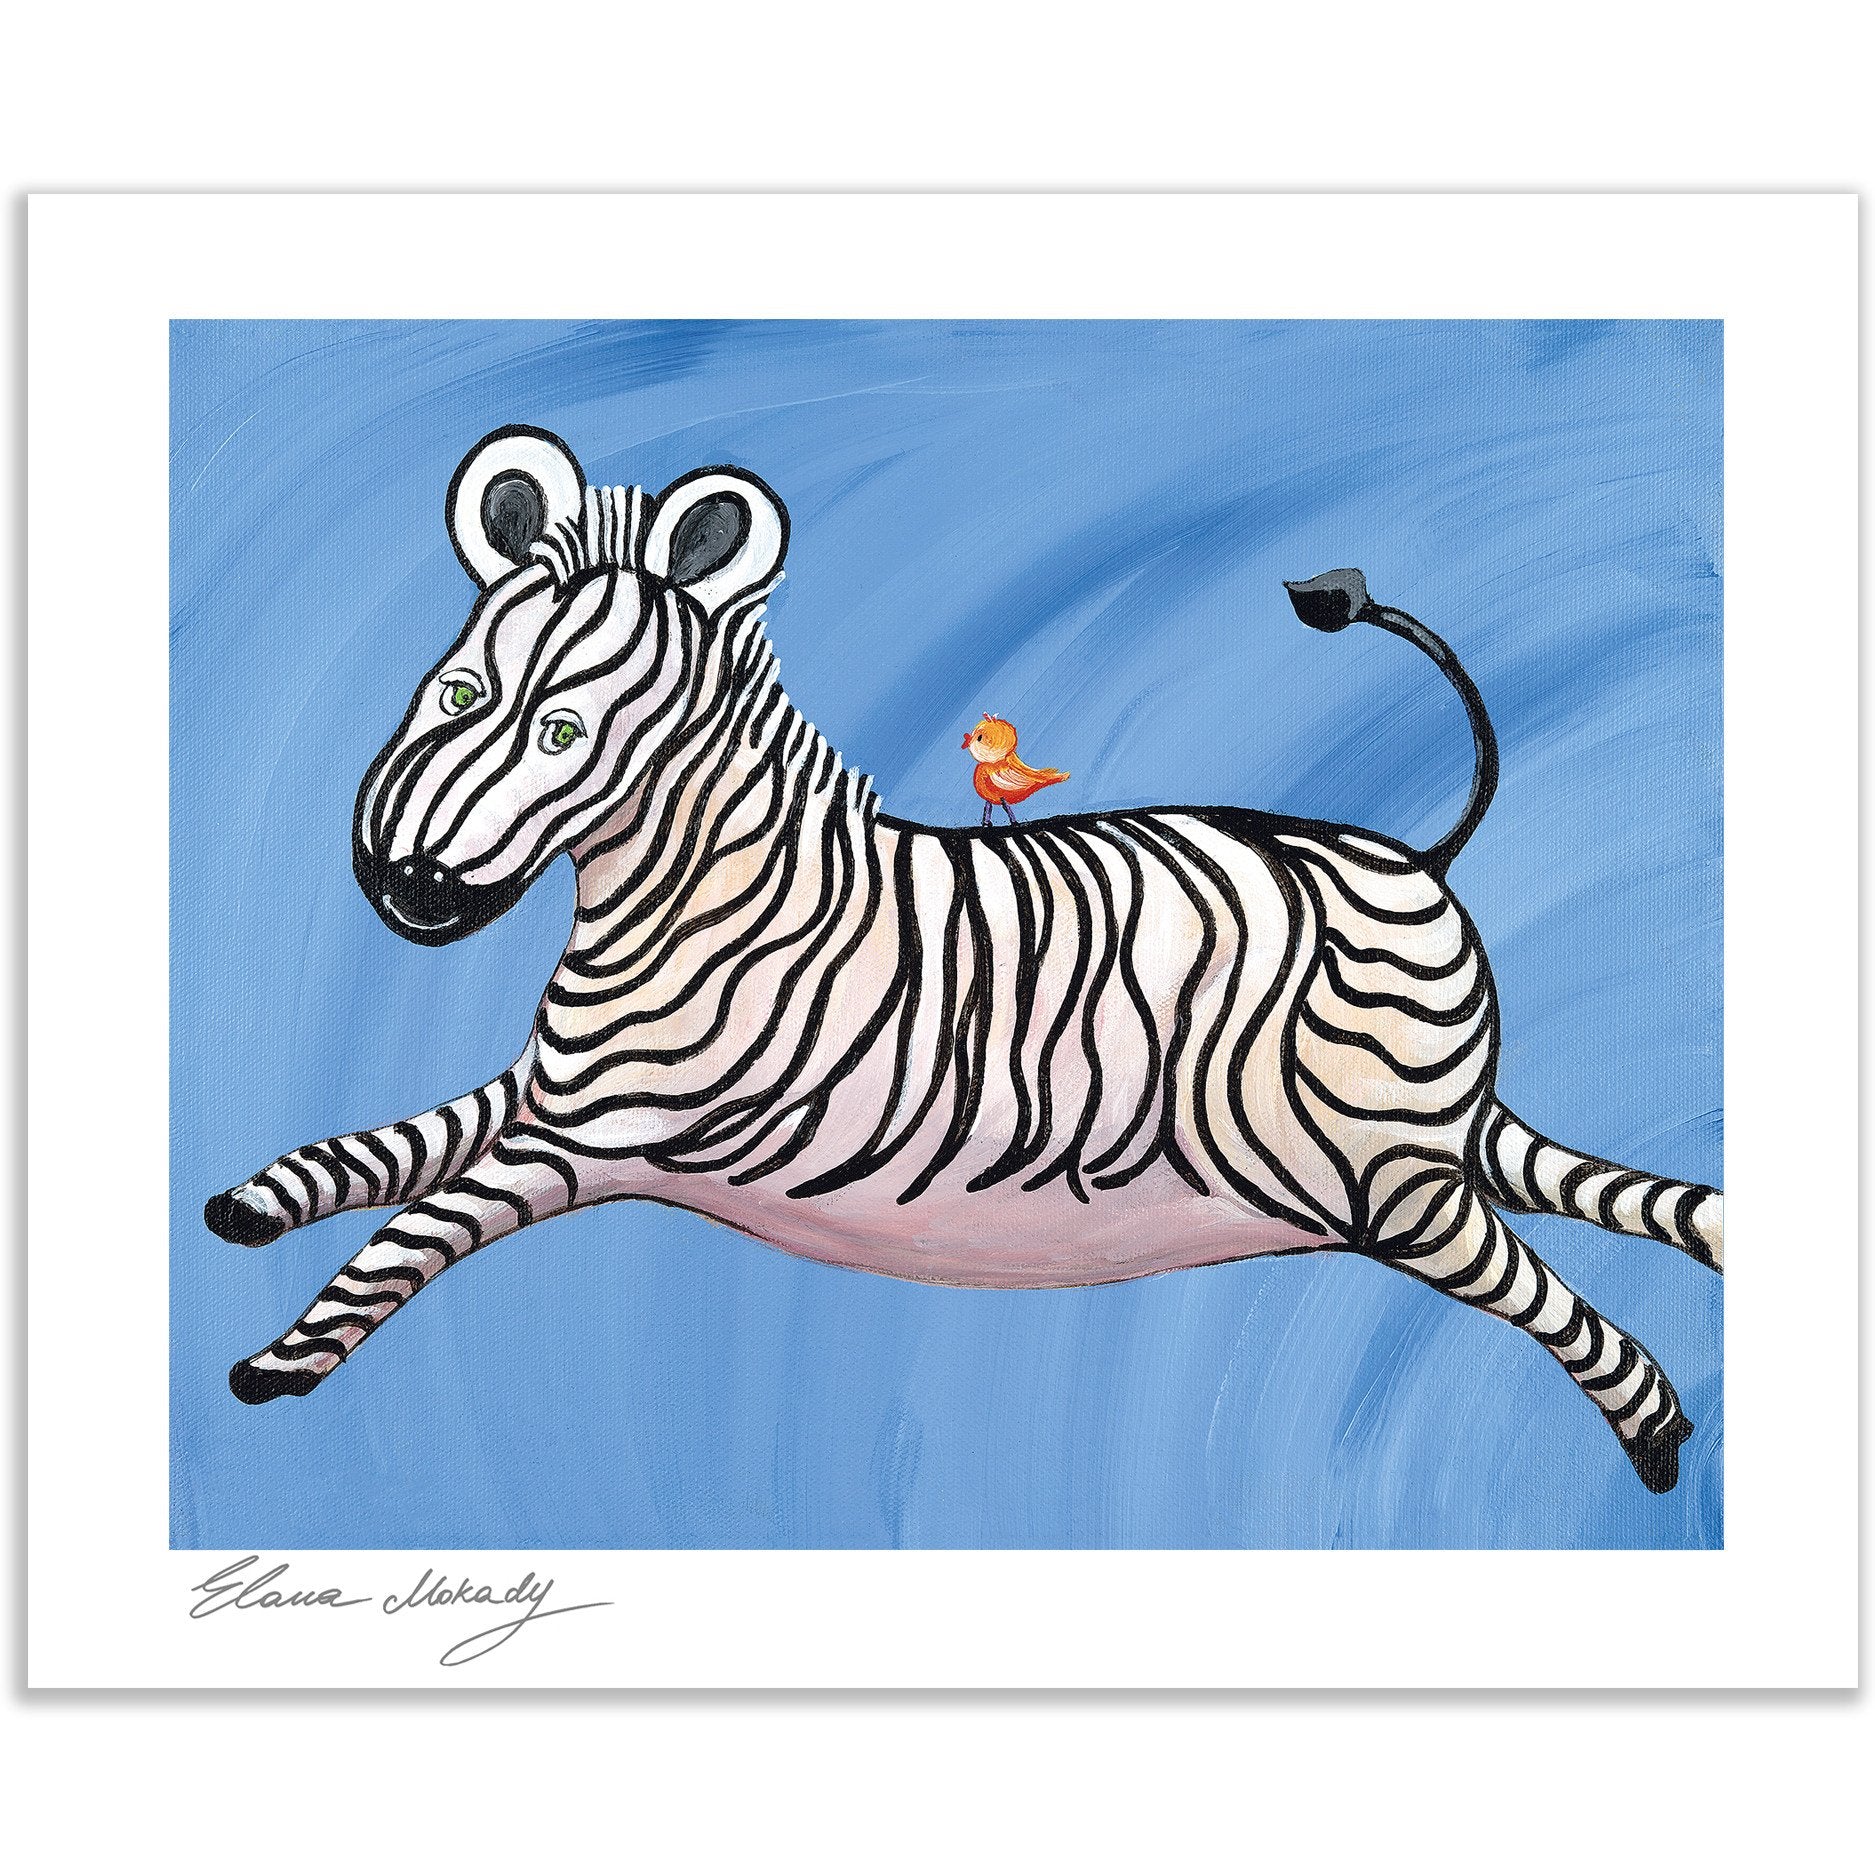 "Stripes" the Happy Zebra Paper Print Wall Art